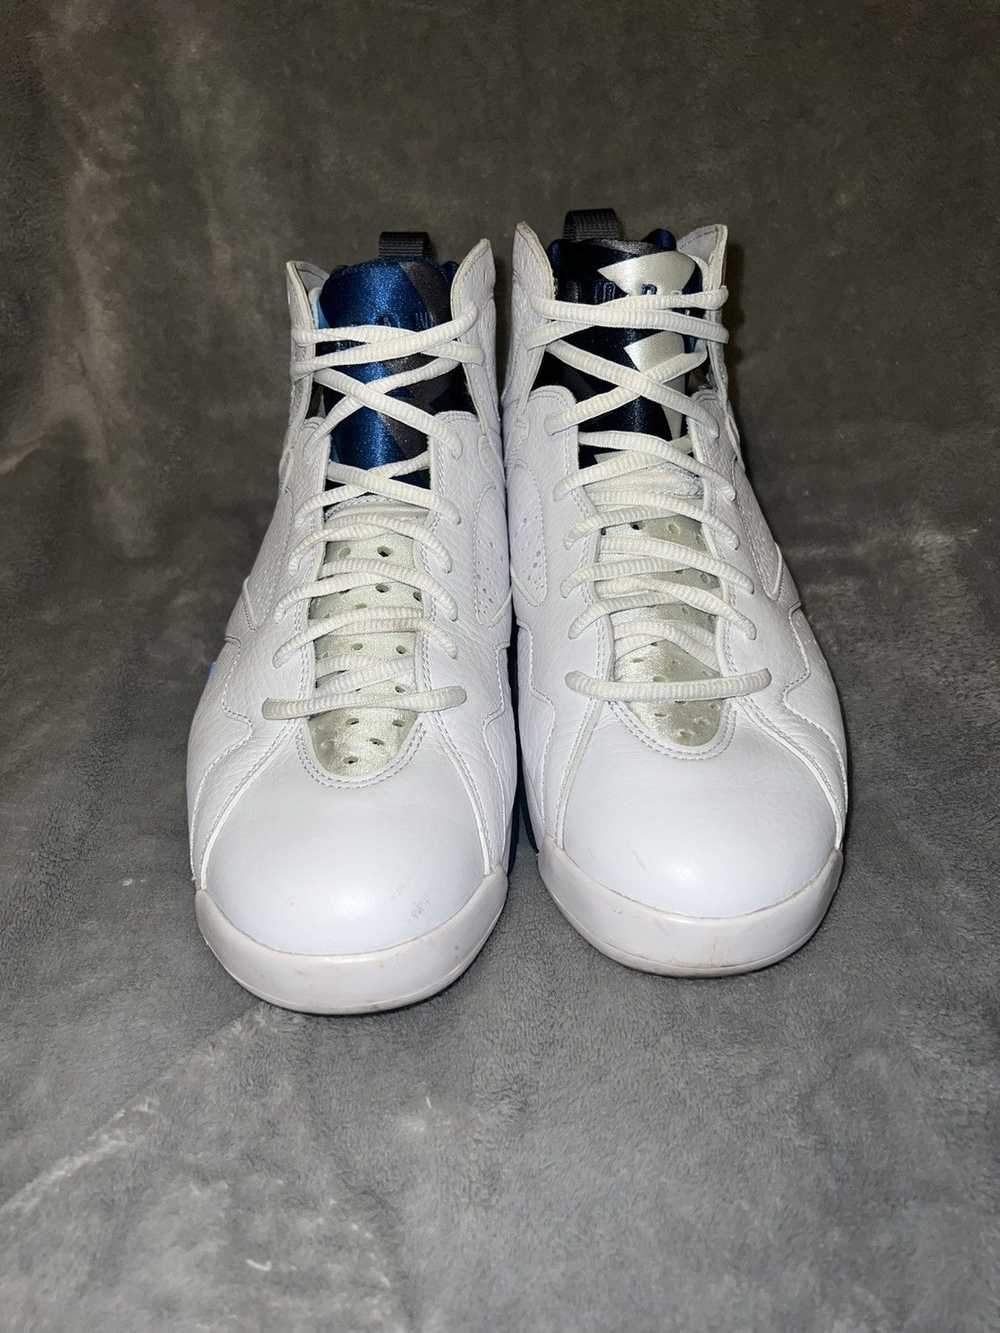 Jordan Brand × Nike Jordan 7 “French Blue” - image 1